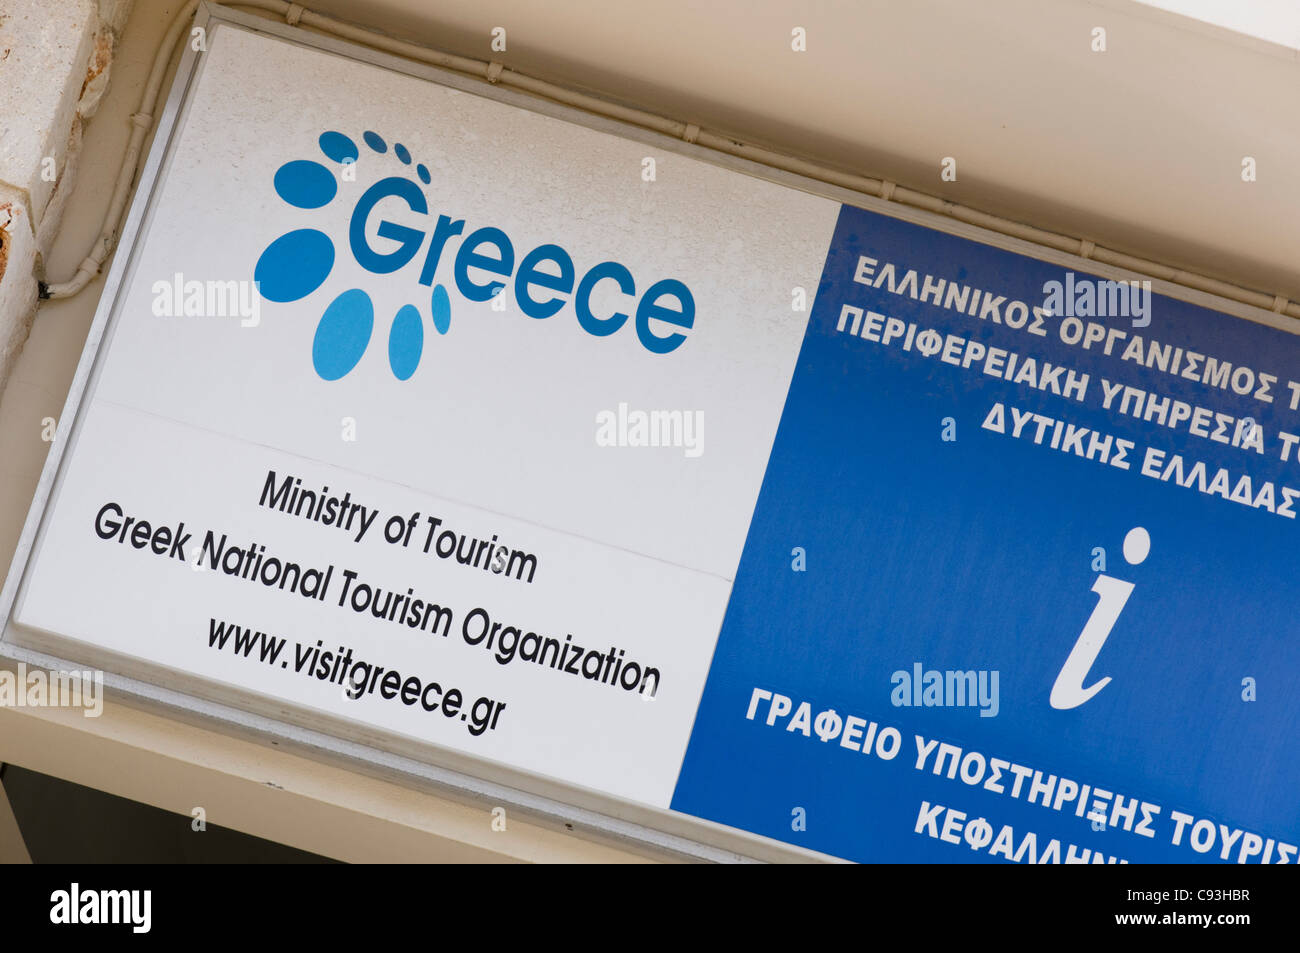 Argostoli, Kefalonia - Greek Tourism Ministry. Stock Photo